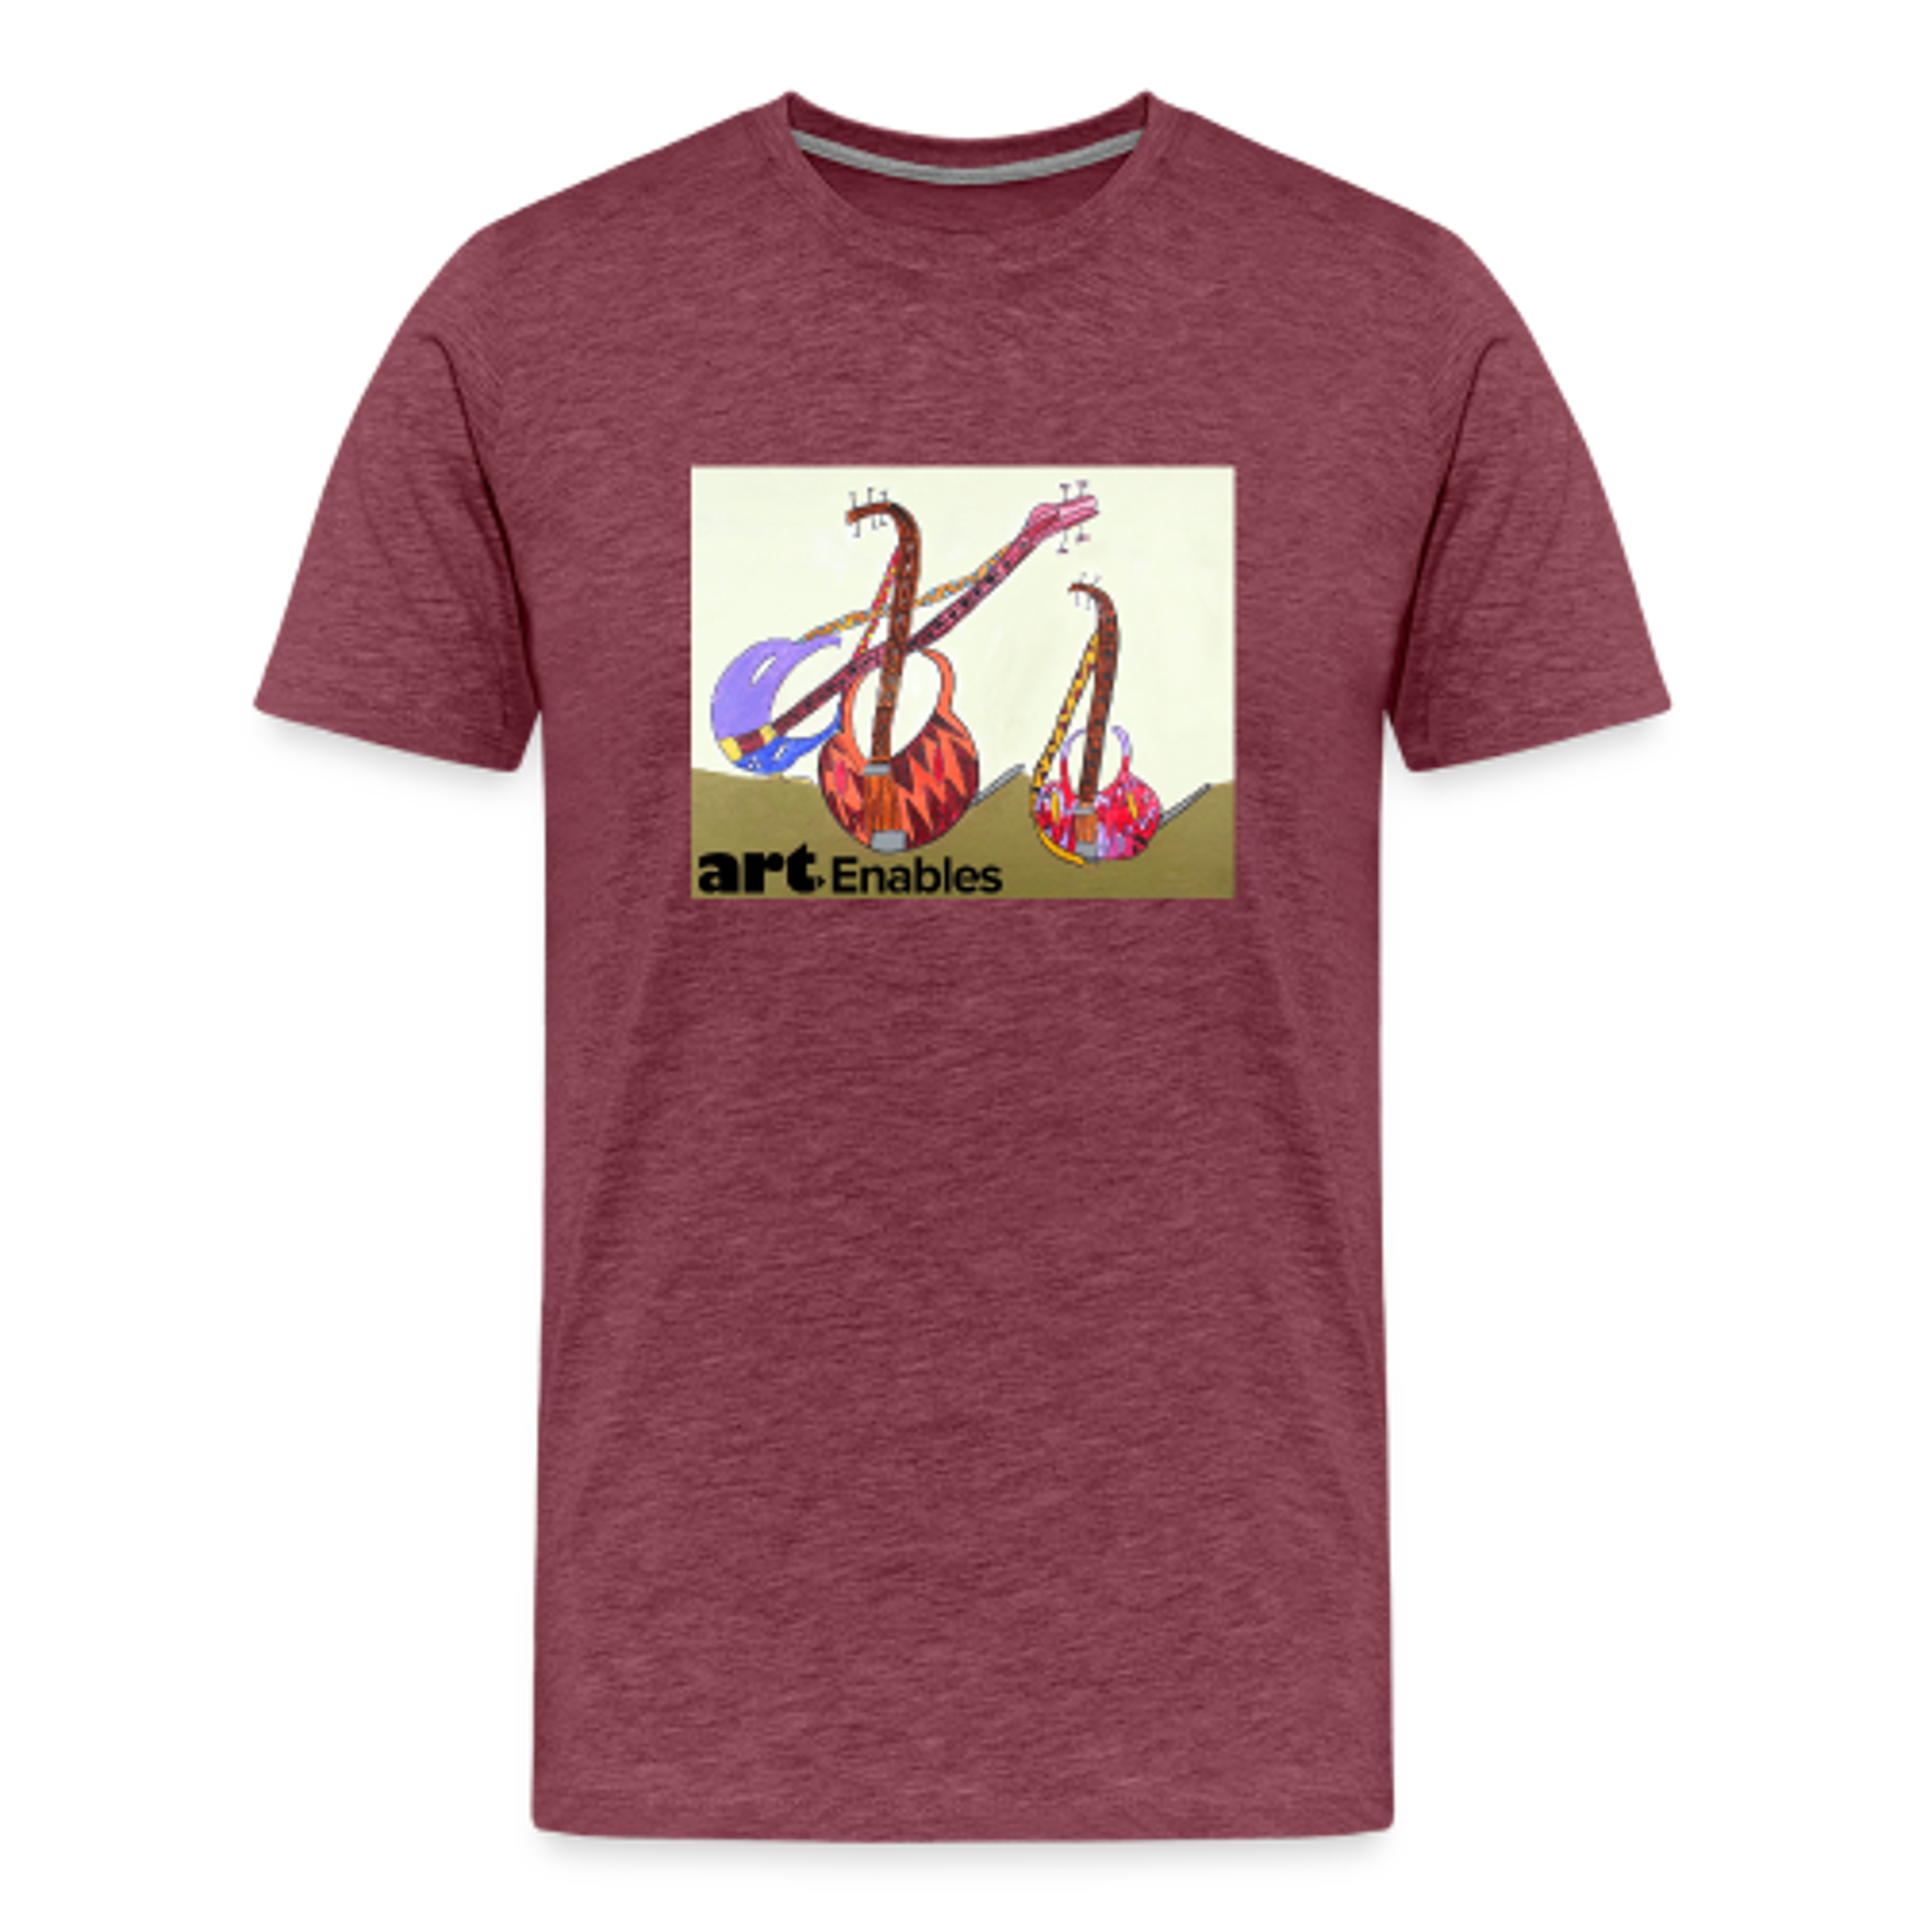 Men's T-shirt (artwork by Max Poznerzon) Medium - heather burgundy by Art Enables Merchandise